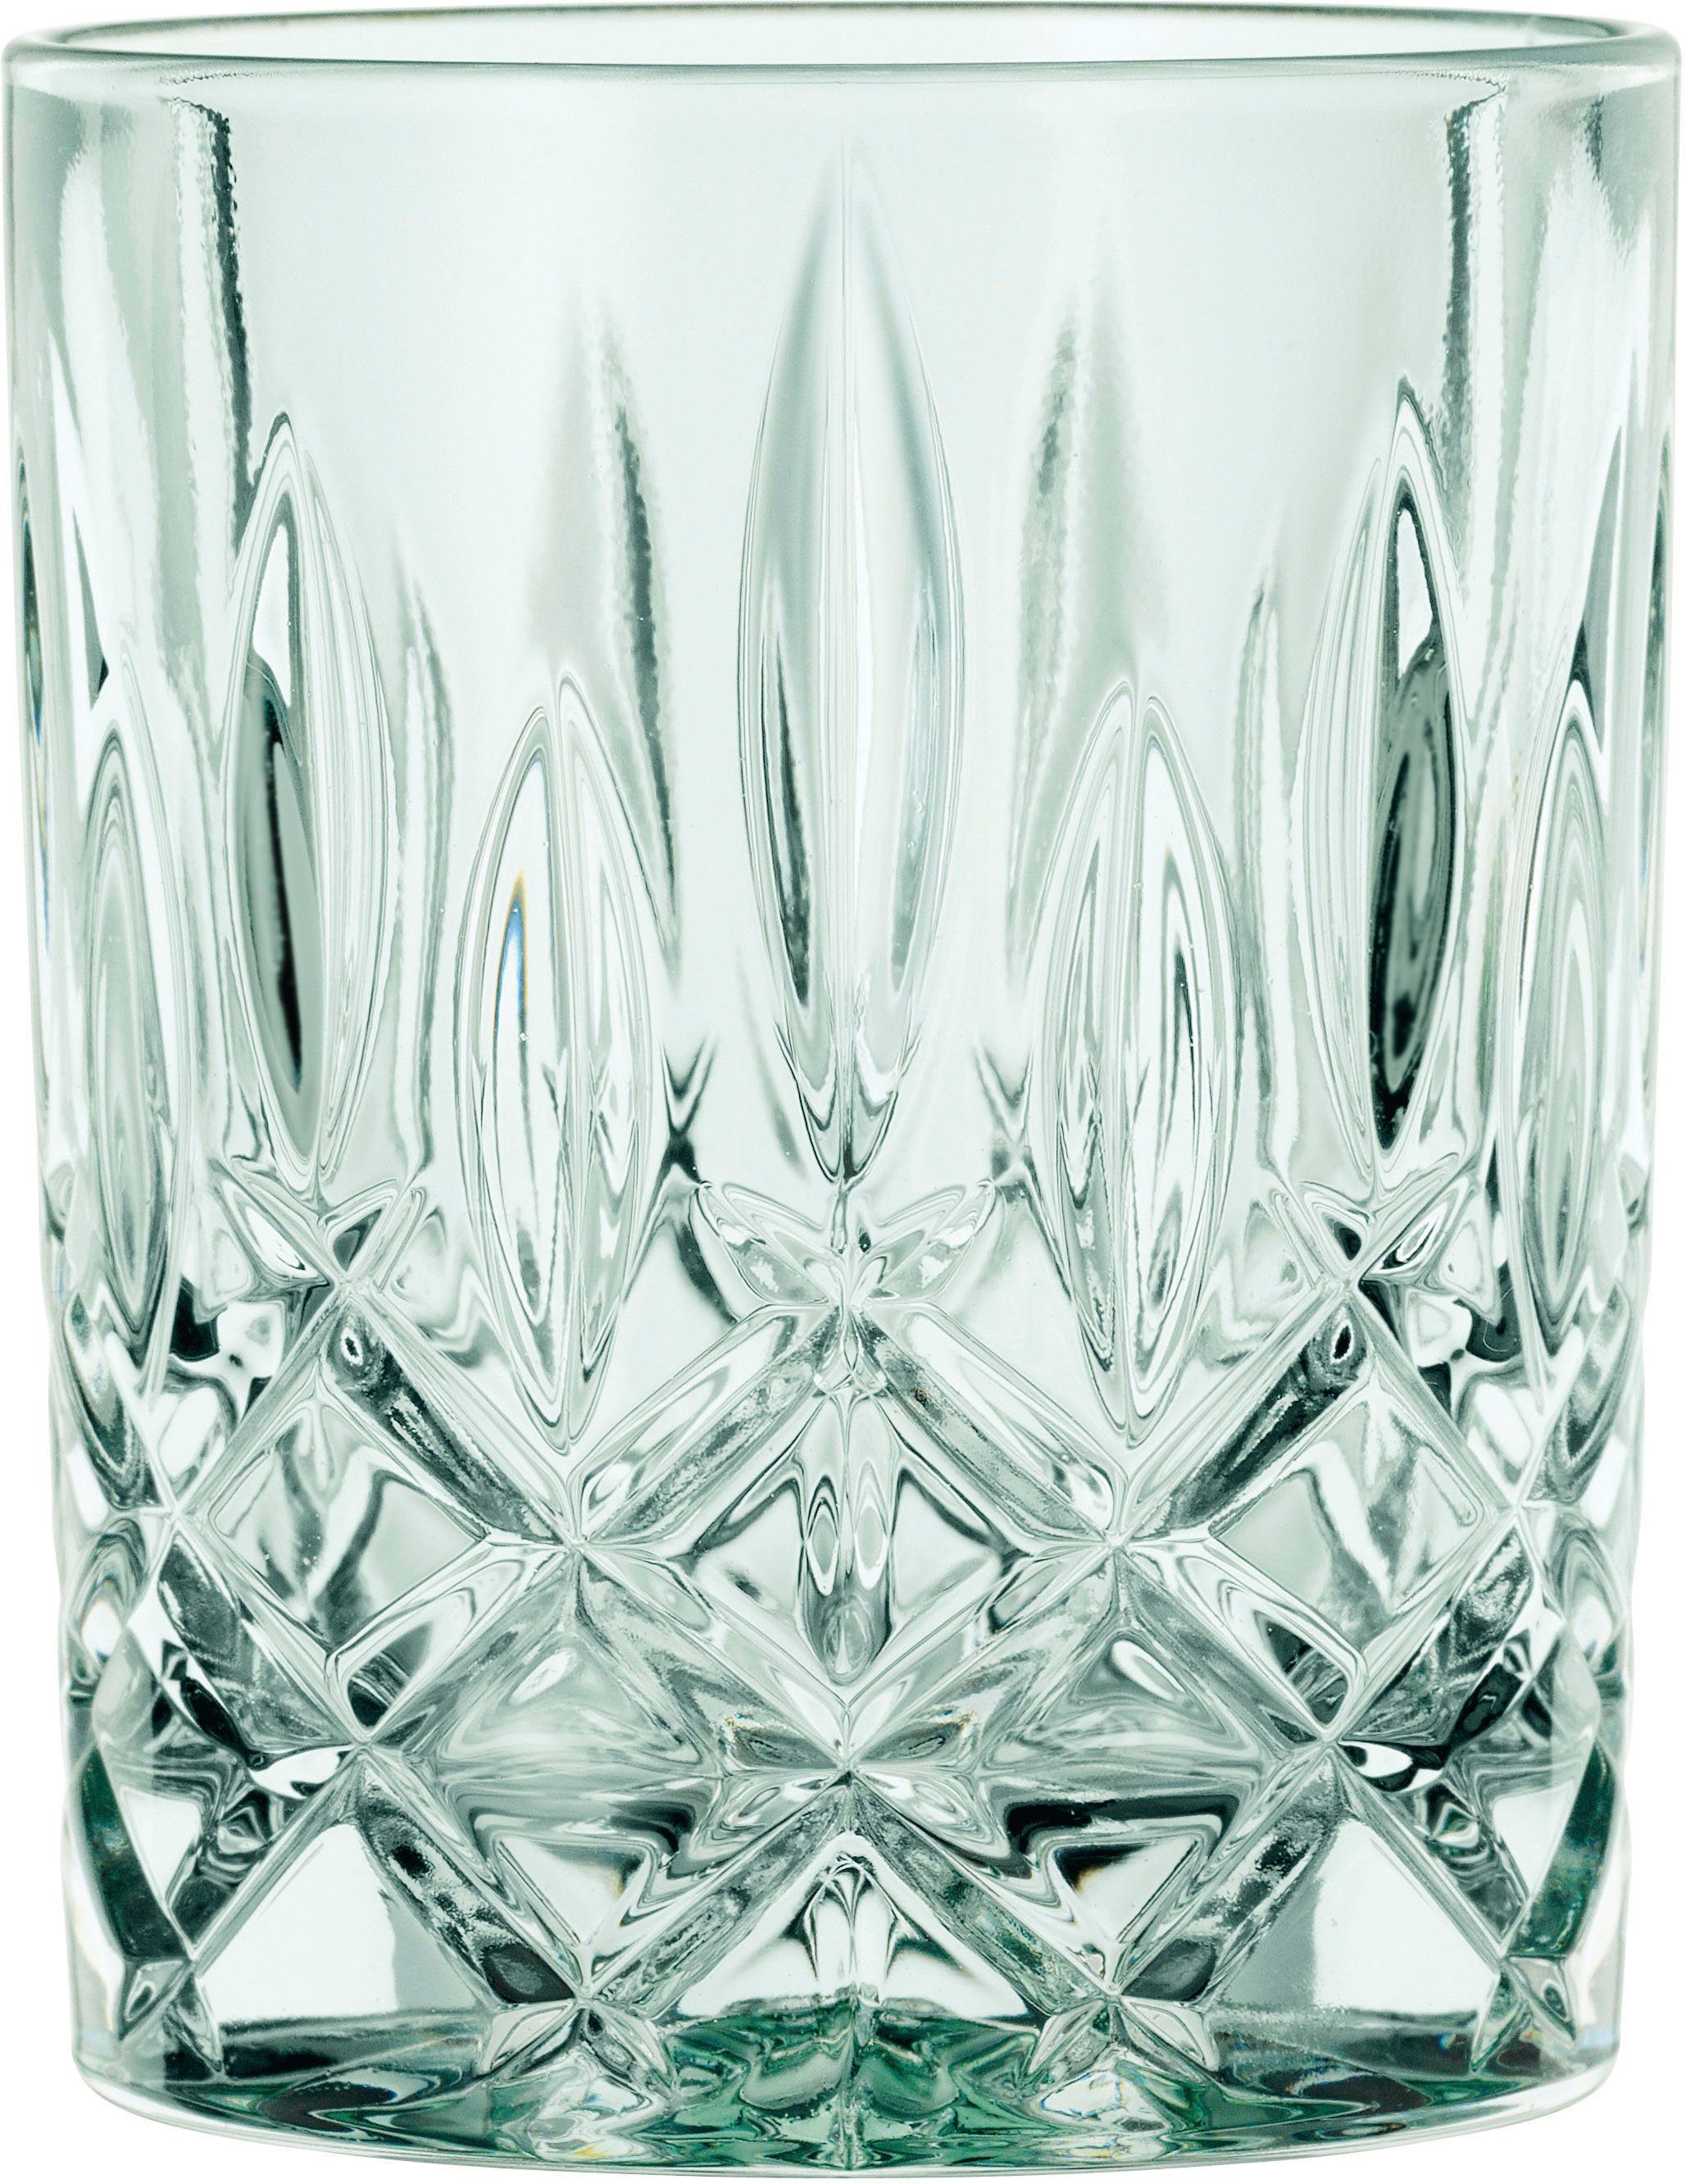 Nachtmann Whiskyglas Noblesse, Kristallglas, Made ml, in 2-teilig mint Germany, 295